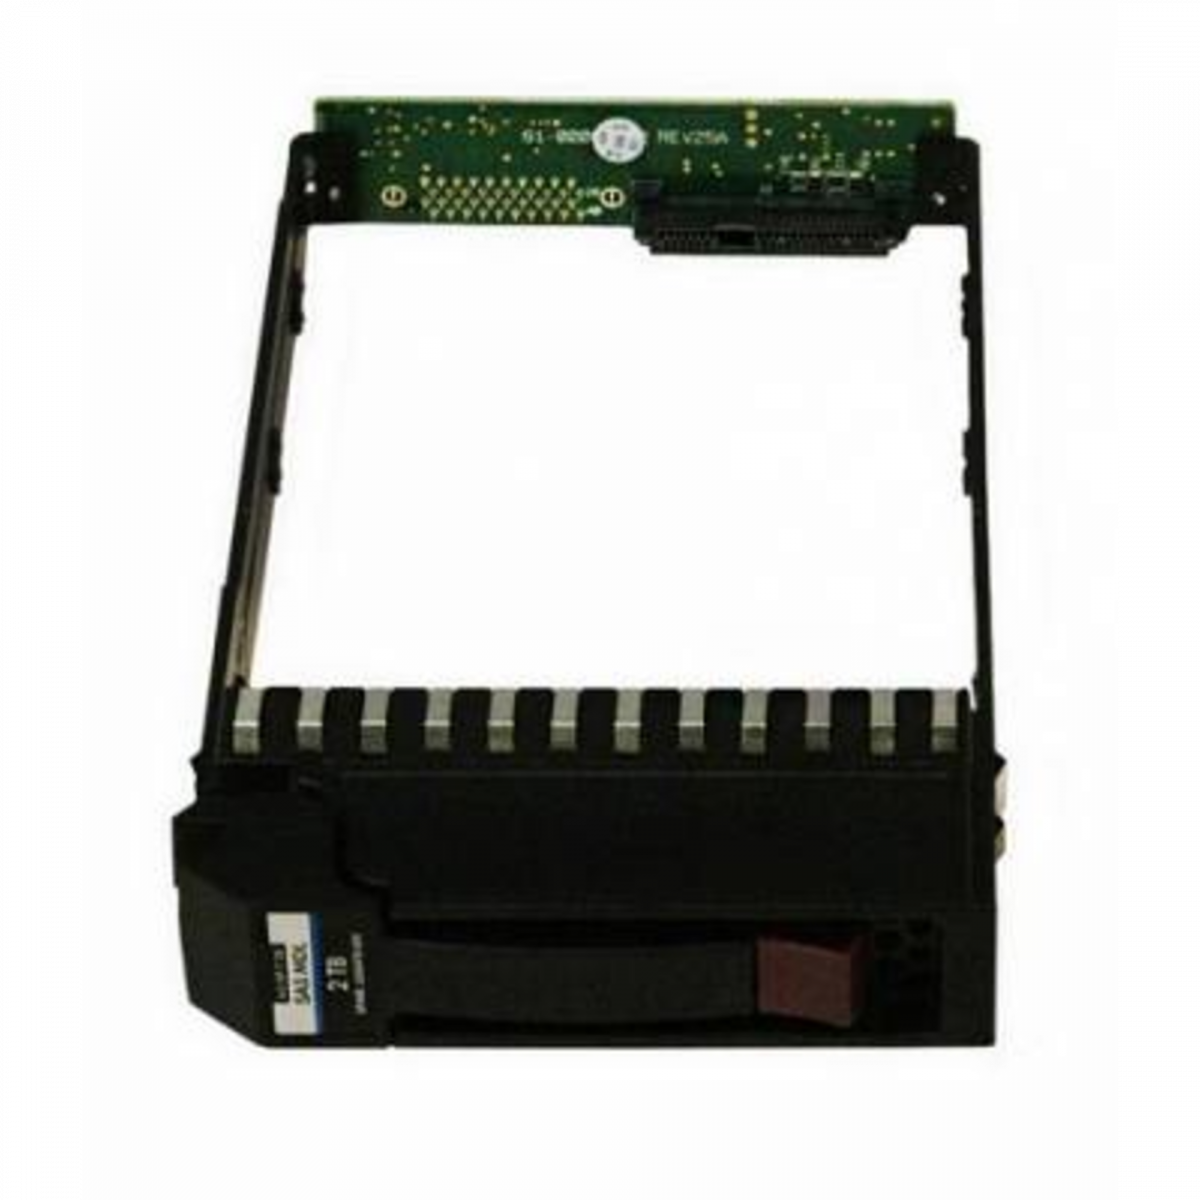 Салазки Drive Tray HP Proliant 3,5' SAS, SATA для HP StorageWorks 2012i